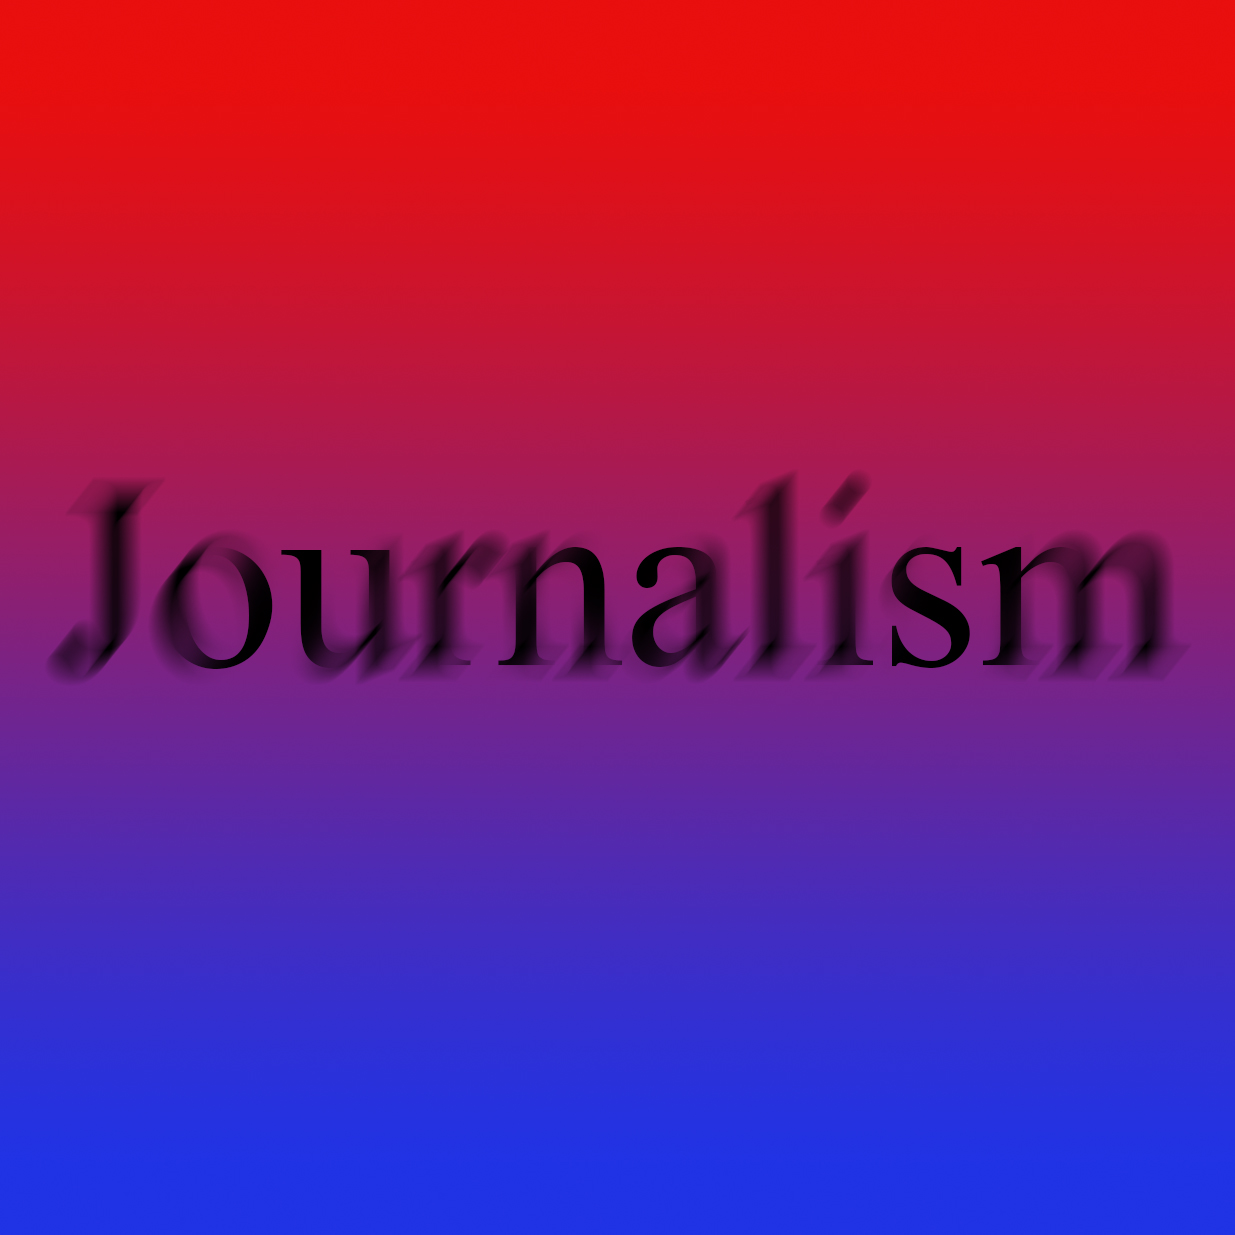 Episode 131: The Path of Objectivity in Journalism&lt;a href="http://www.strideandsaunter.com/new-blog/2017/2/8/episode-131-the-path-of-objectivity-in-journalism"&gt;Listen →&lt;/a&gt;&lt;/p&gt;